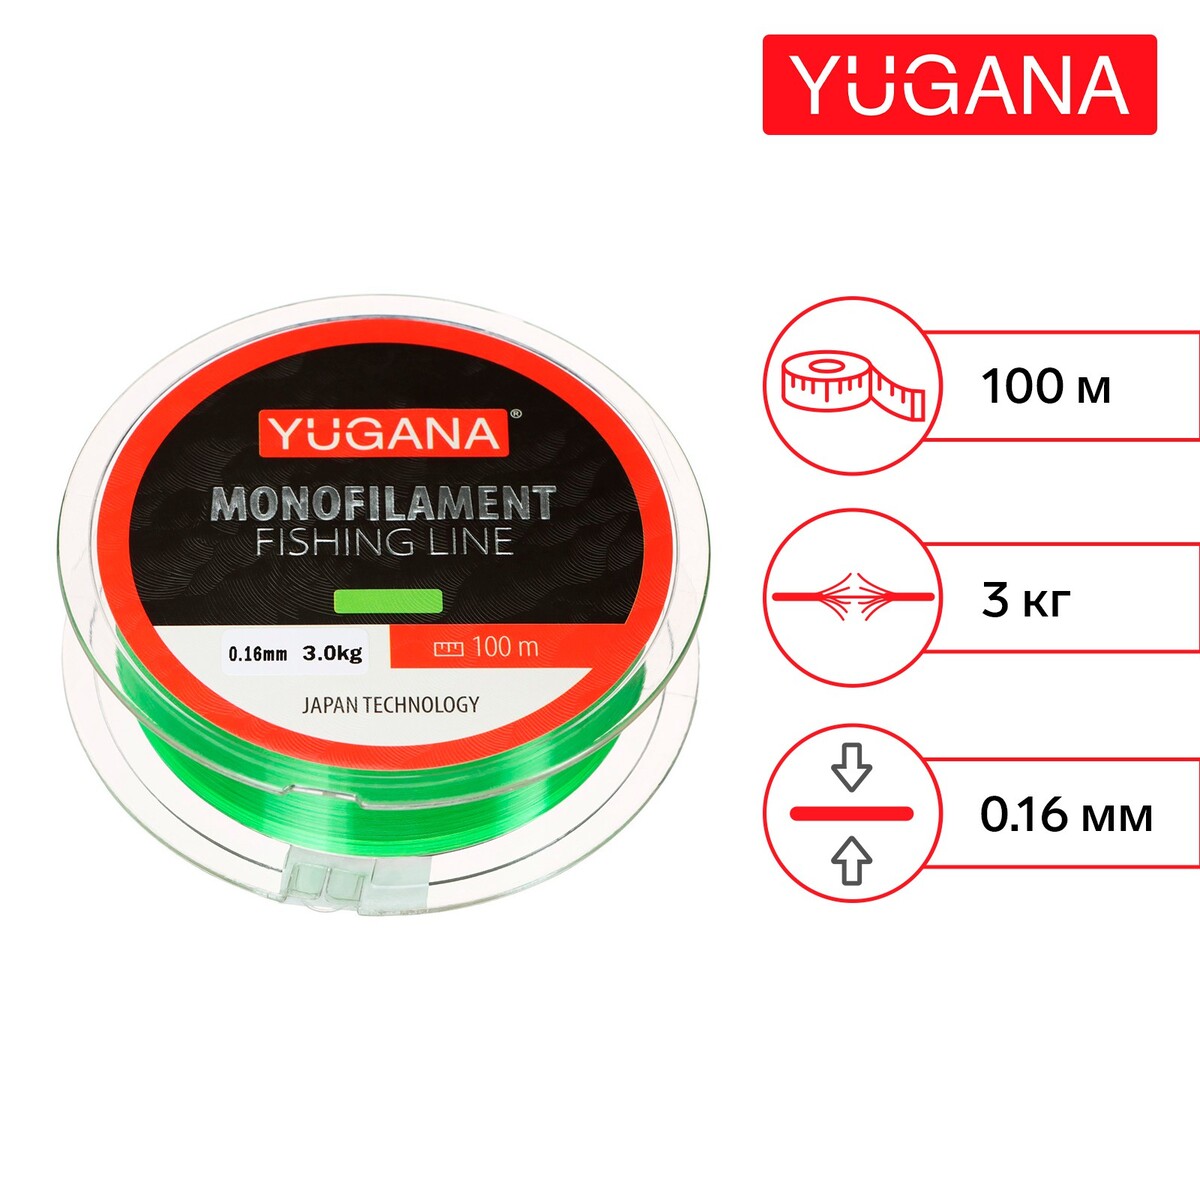 фото Леска монофильная yugana, диаметр 0.16 мм, тест 3 кг, 100 м, зеленая